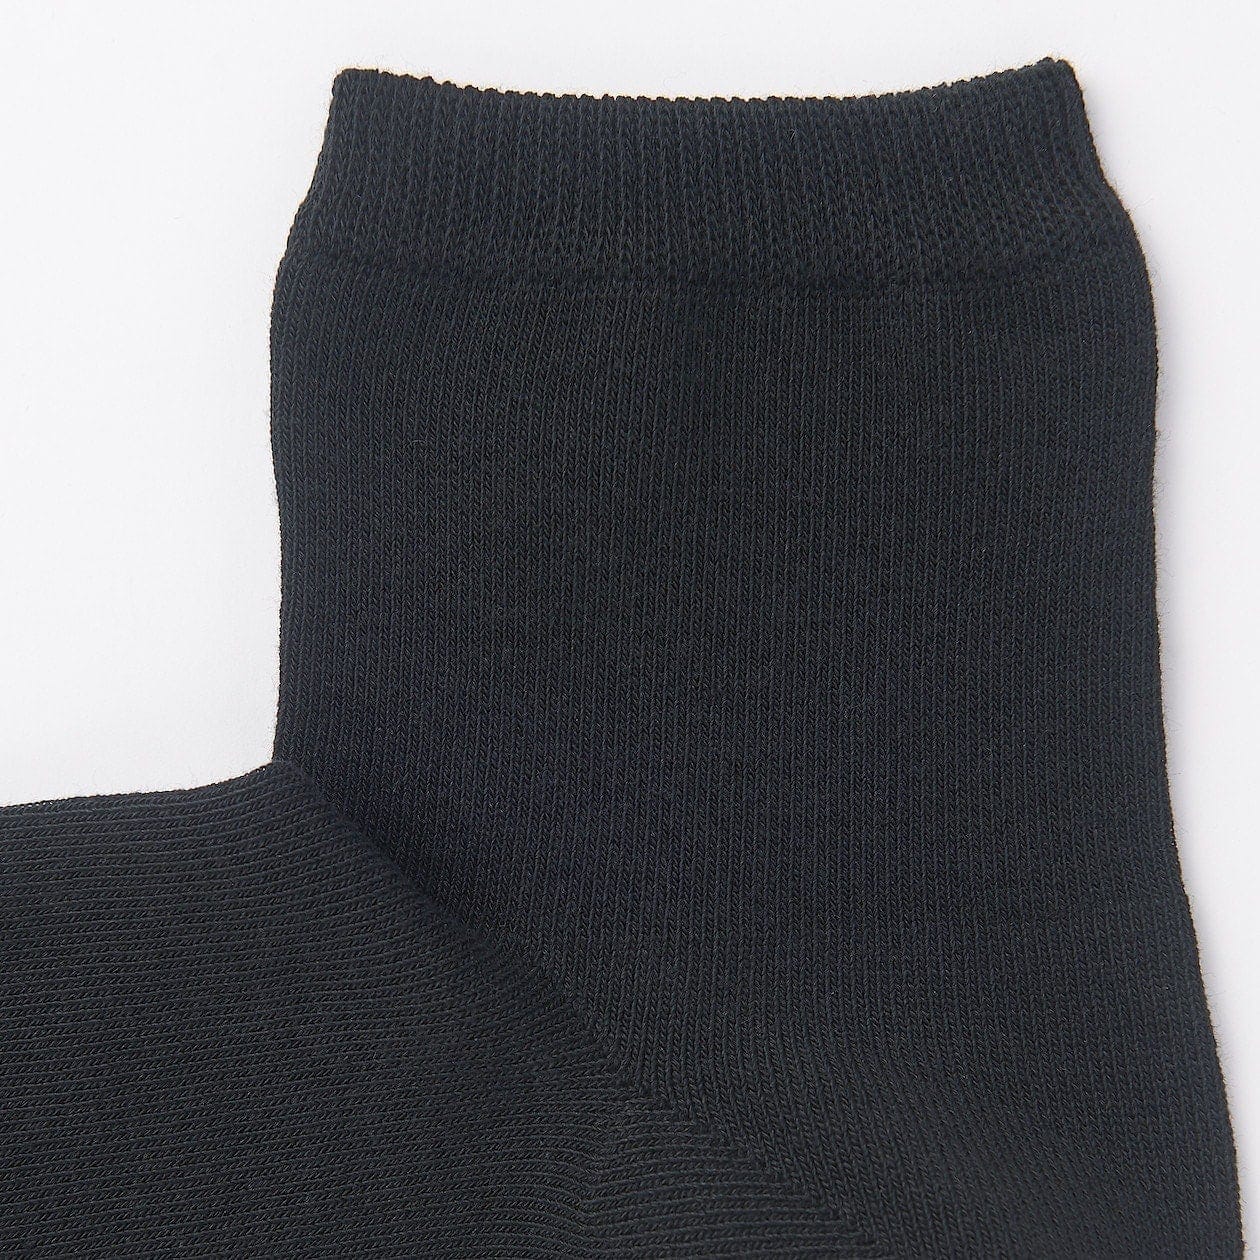 Right Angle Loose Top Short Socks 21-27cm